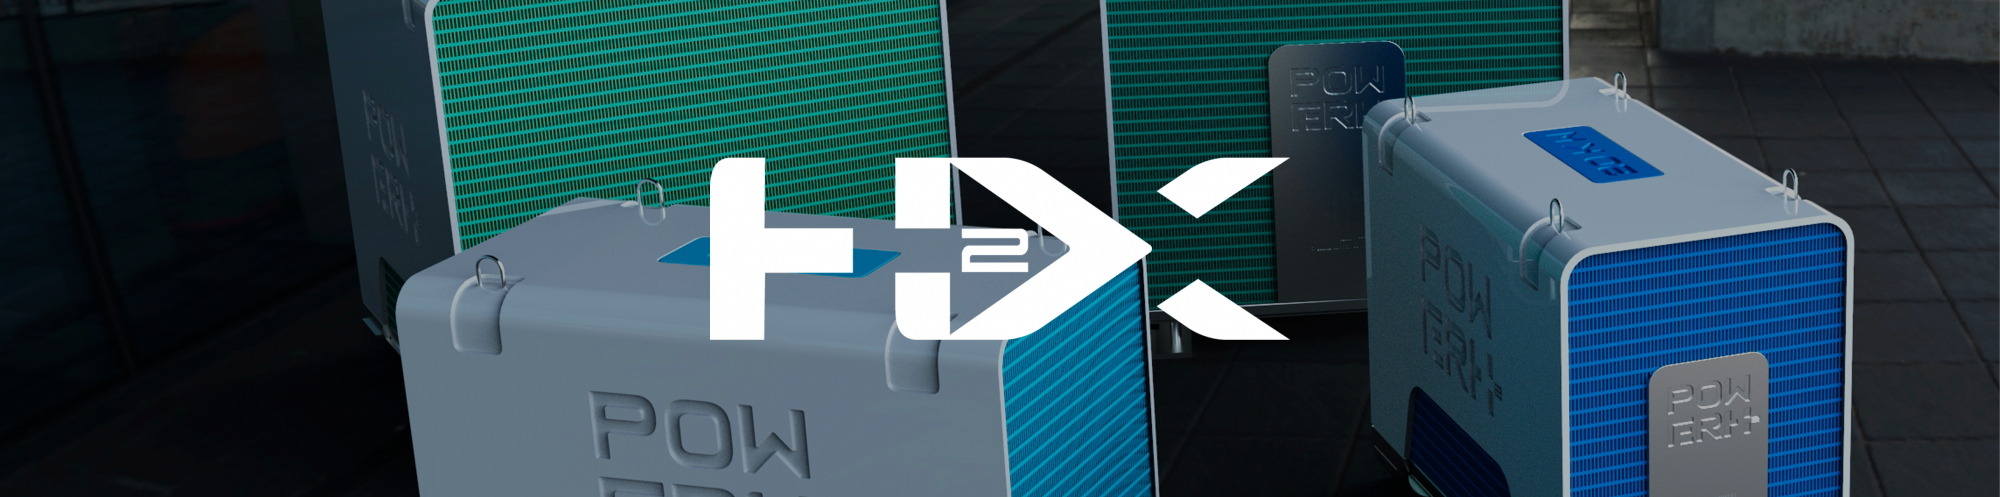 h2x logo seperator